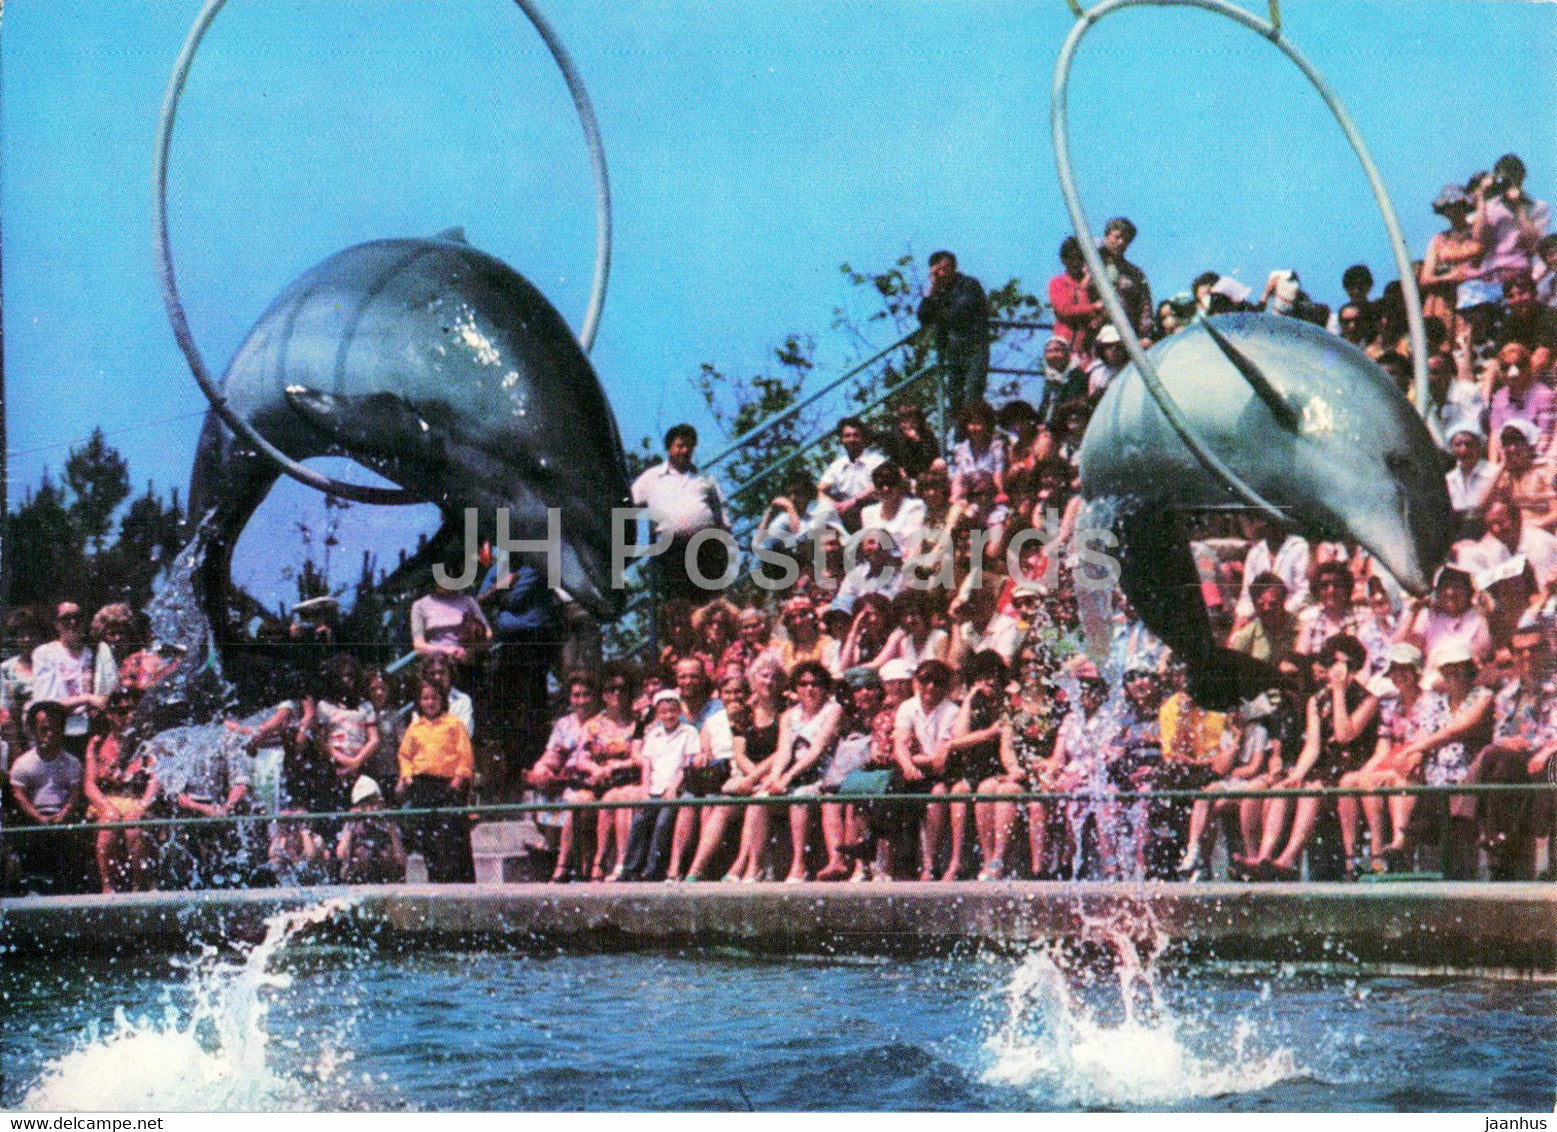 Batumi Dolphinarium - jump over the rings - dolphin - 1980 - Georgia USSR - unused - JH Postcards